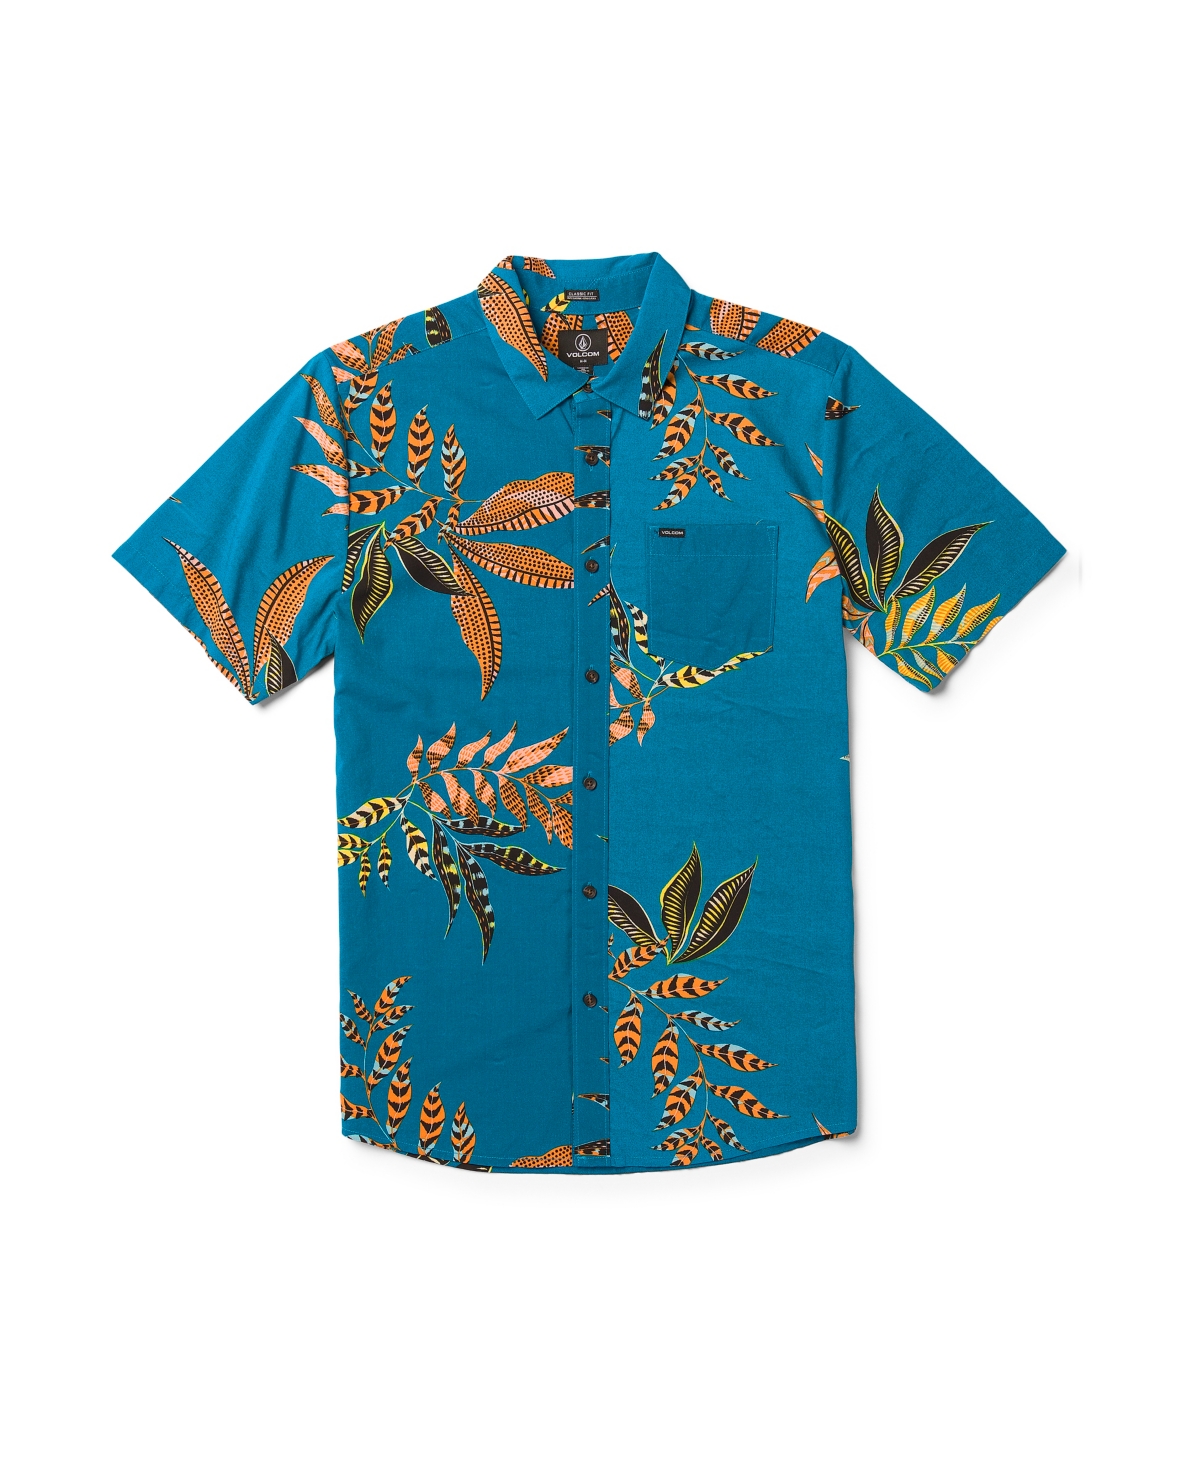 Men's Paradiso Floral Short Sleeve Shirt - Ocean Teal